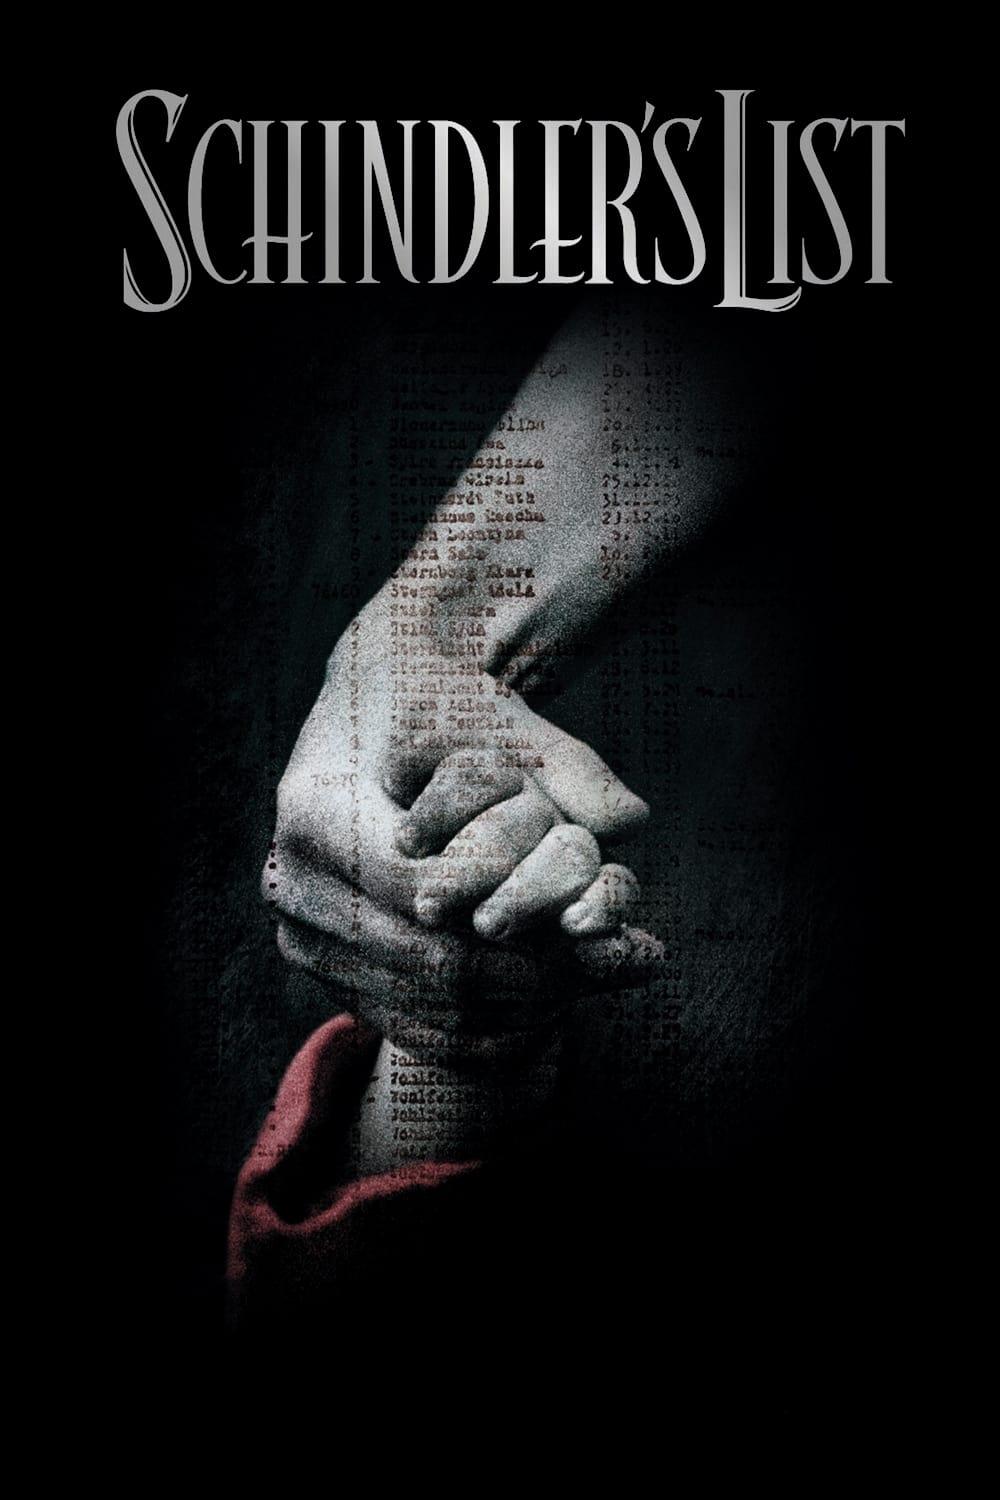 Movie poster of "Schindler's List"